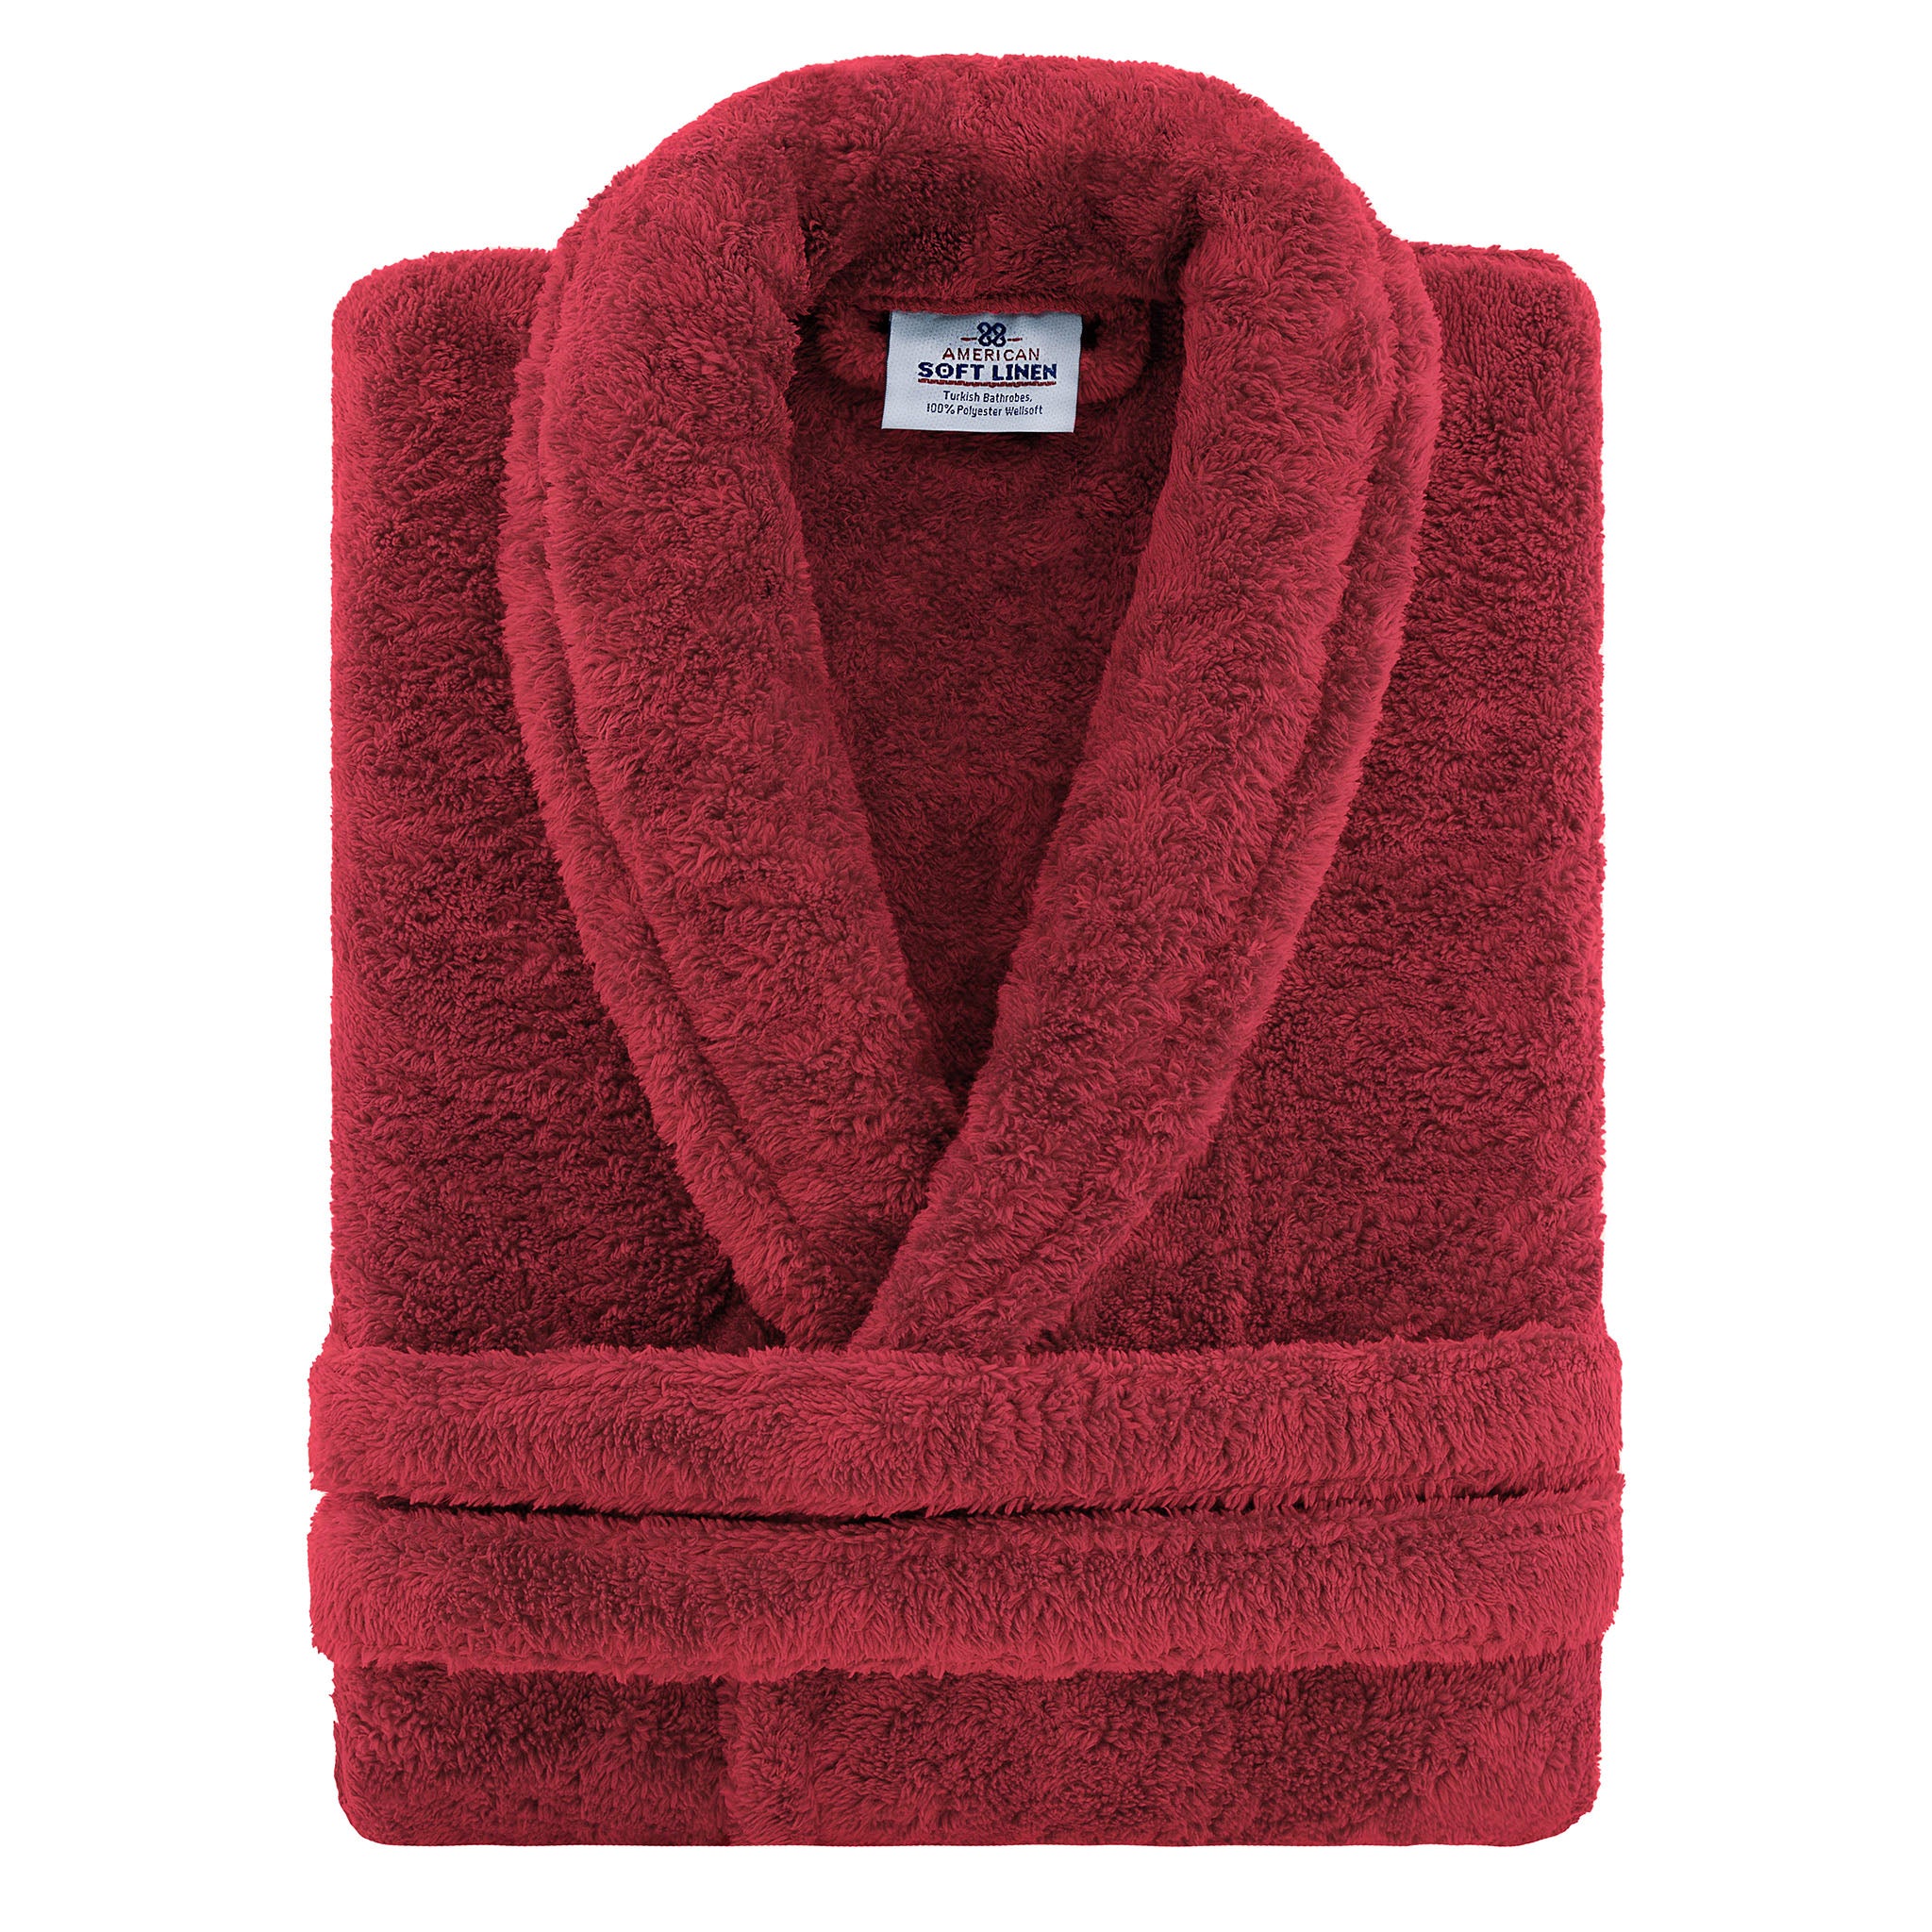 American Soft Linen Super Soft Absorbent and Fluffy Unisex Fleece Bathrobe -12 Set Case Pack -L-XL-Bordeaux-red-3